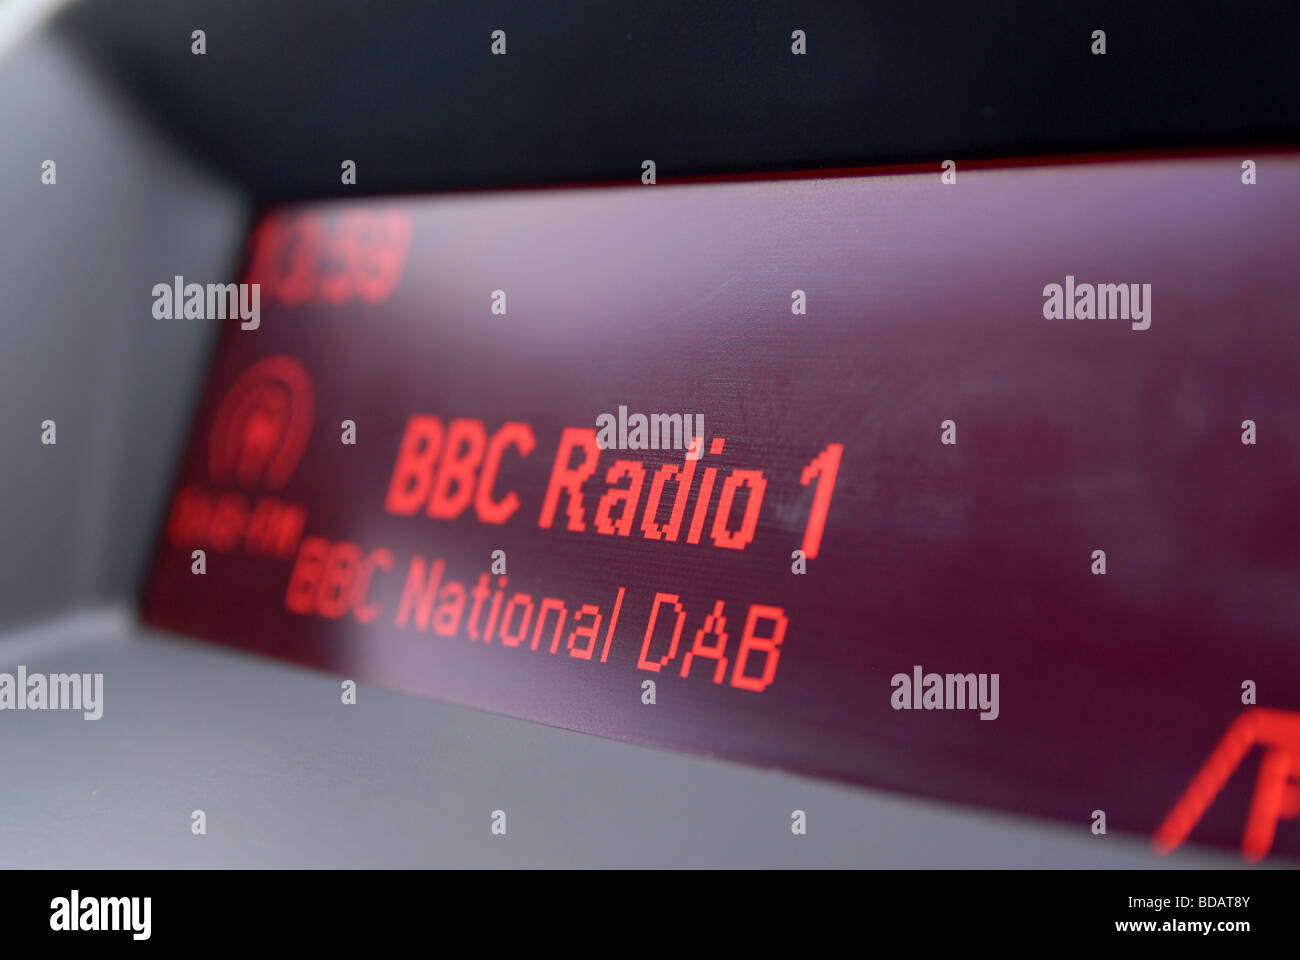 Affichage de la radio sur une radio d'automobile. BBC Radio 1 Banque D'Images